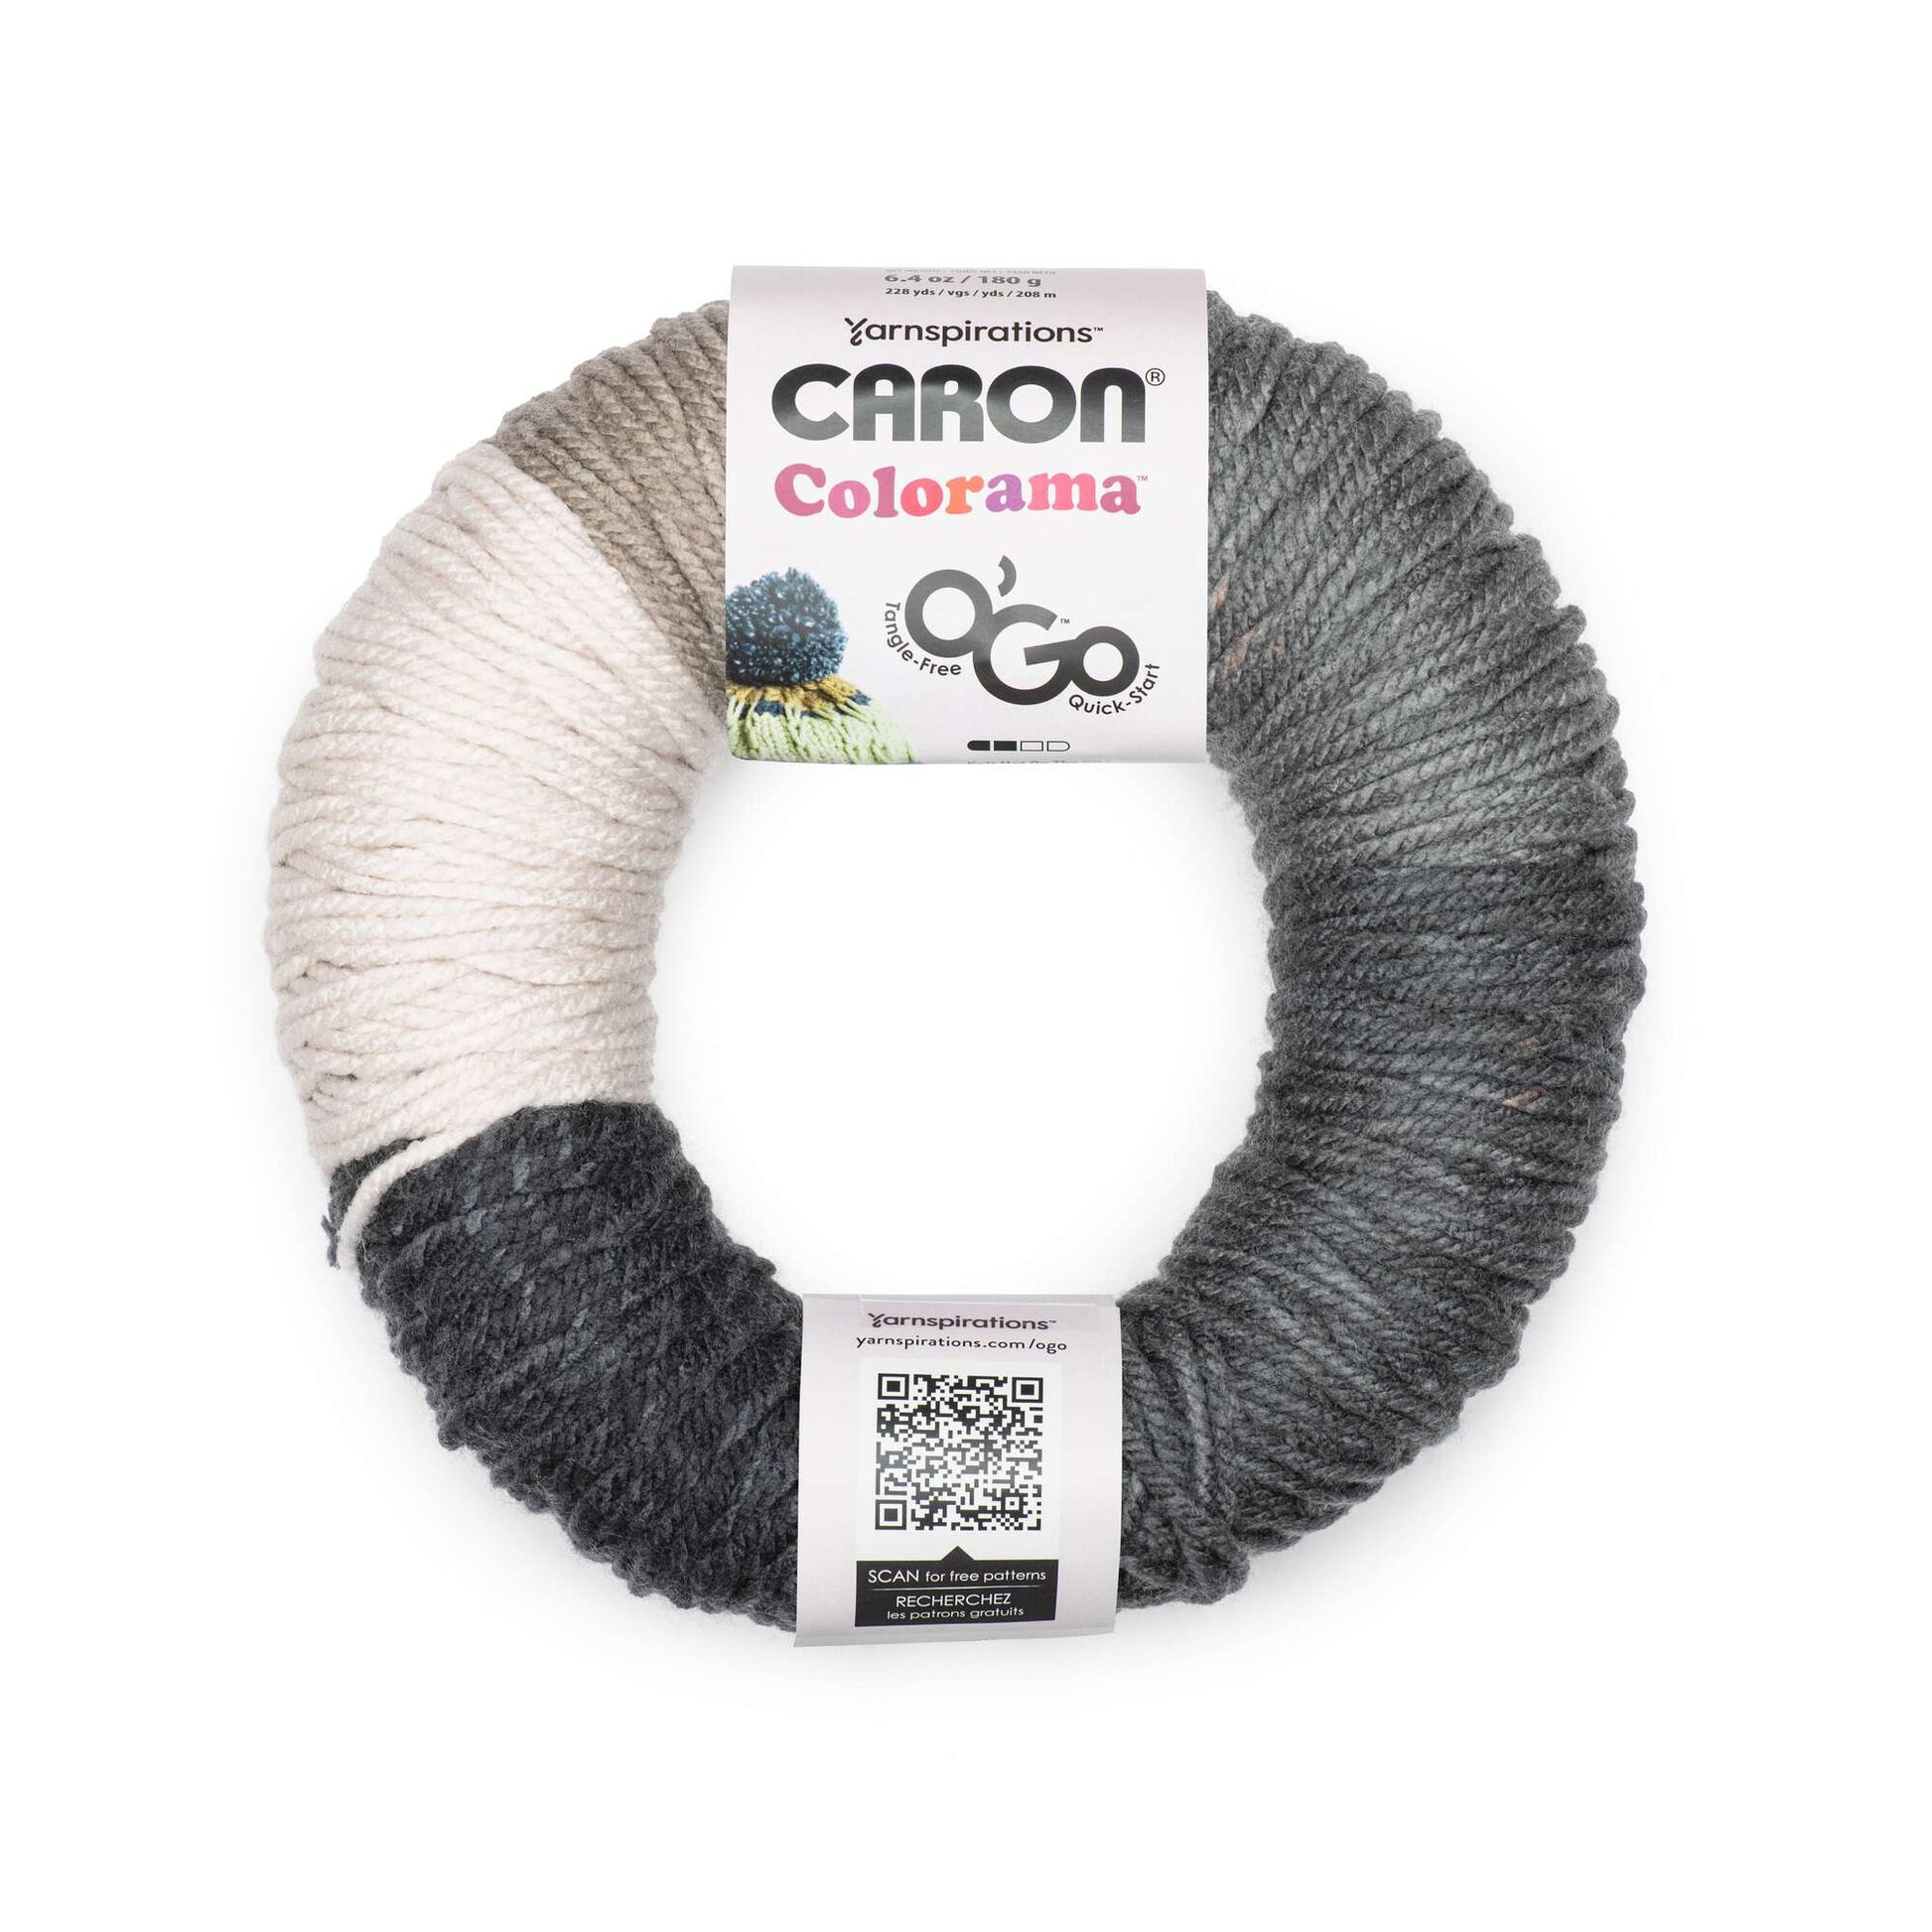 Caron Colorama O'Go Yarn - Clearance Shades* Salt and Pep